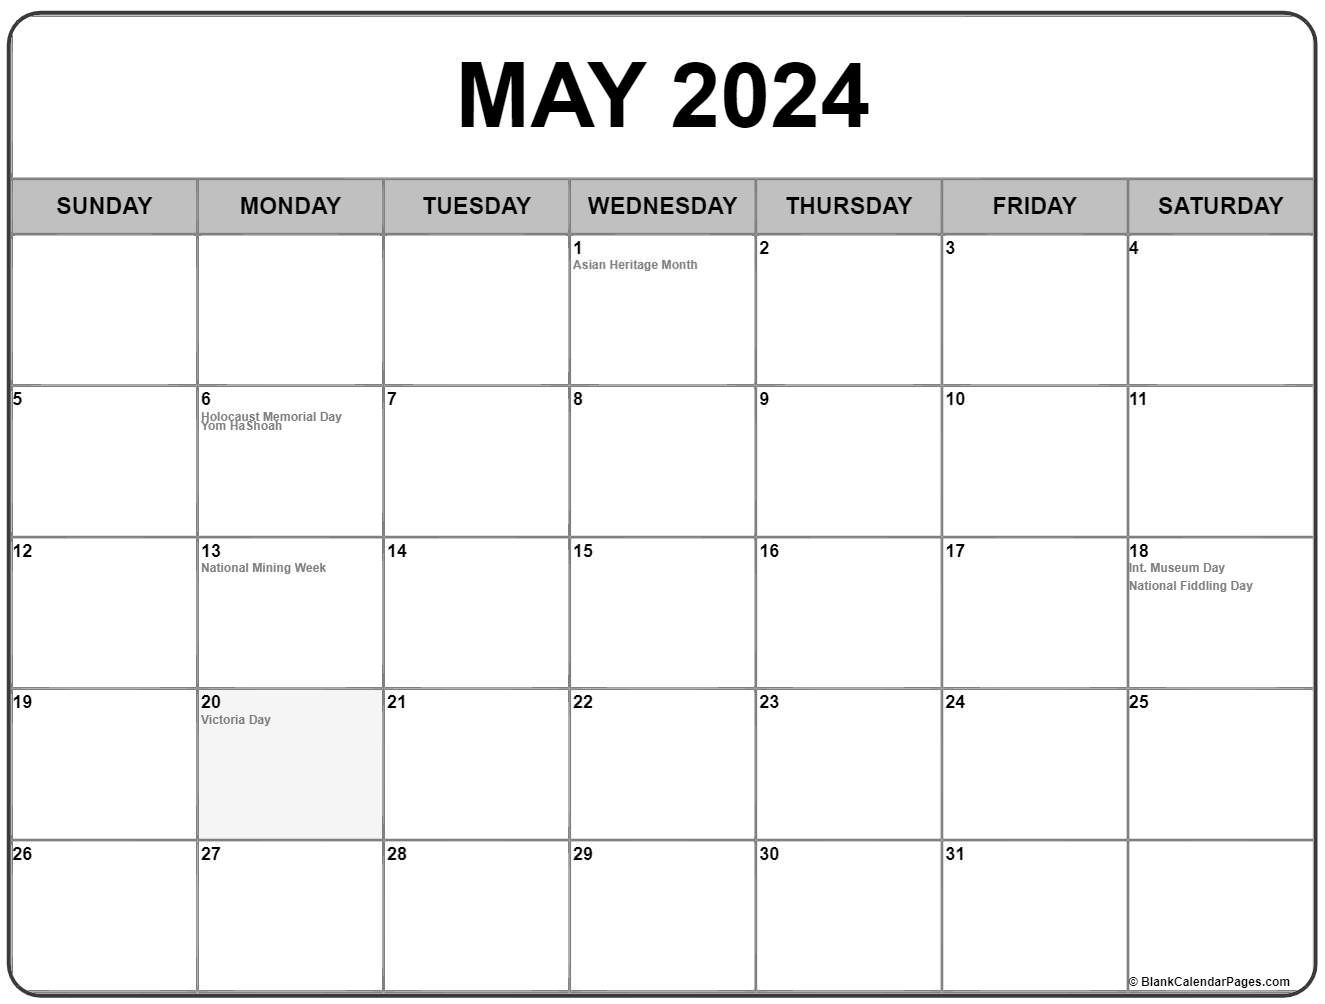 May 2021 Calendar With Holidays May 2021 calendar with holidays